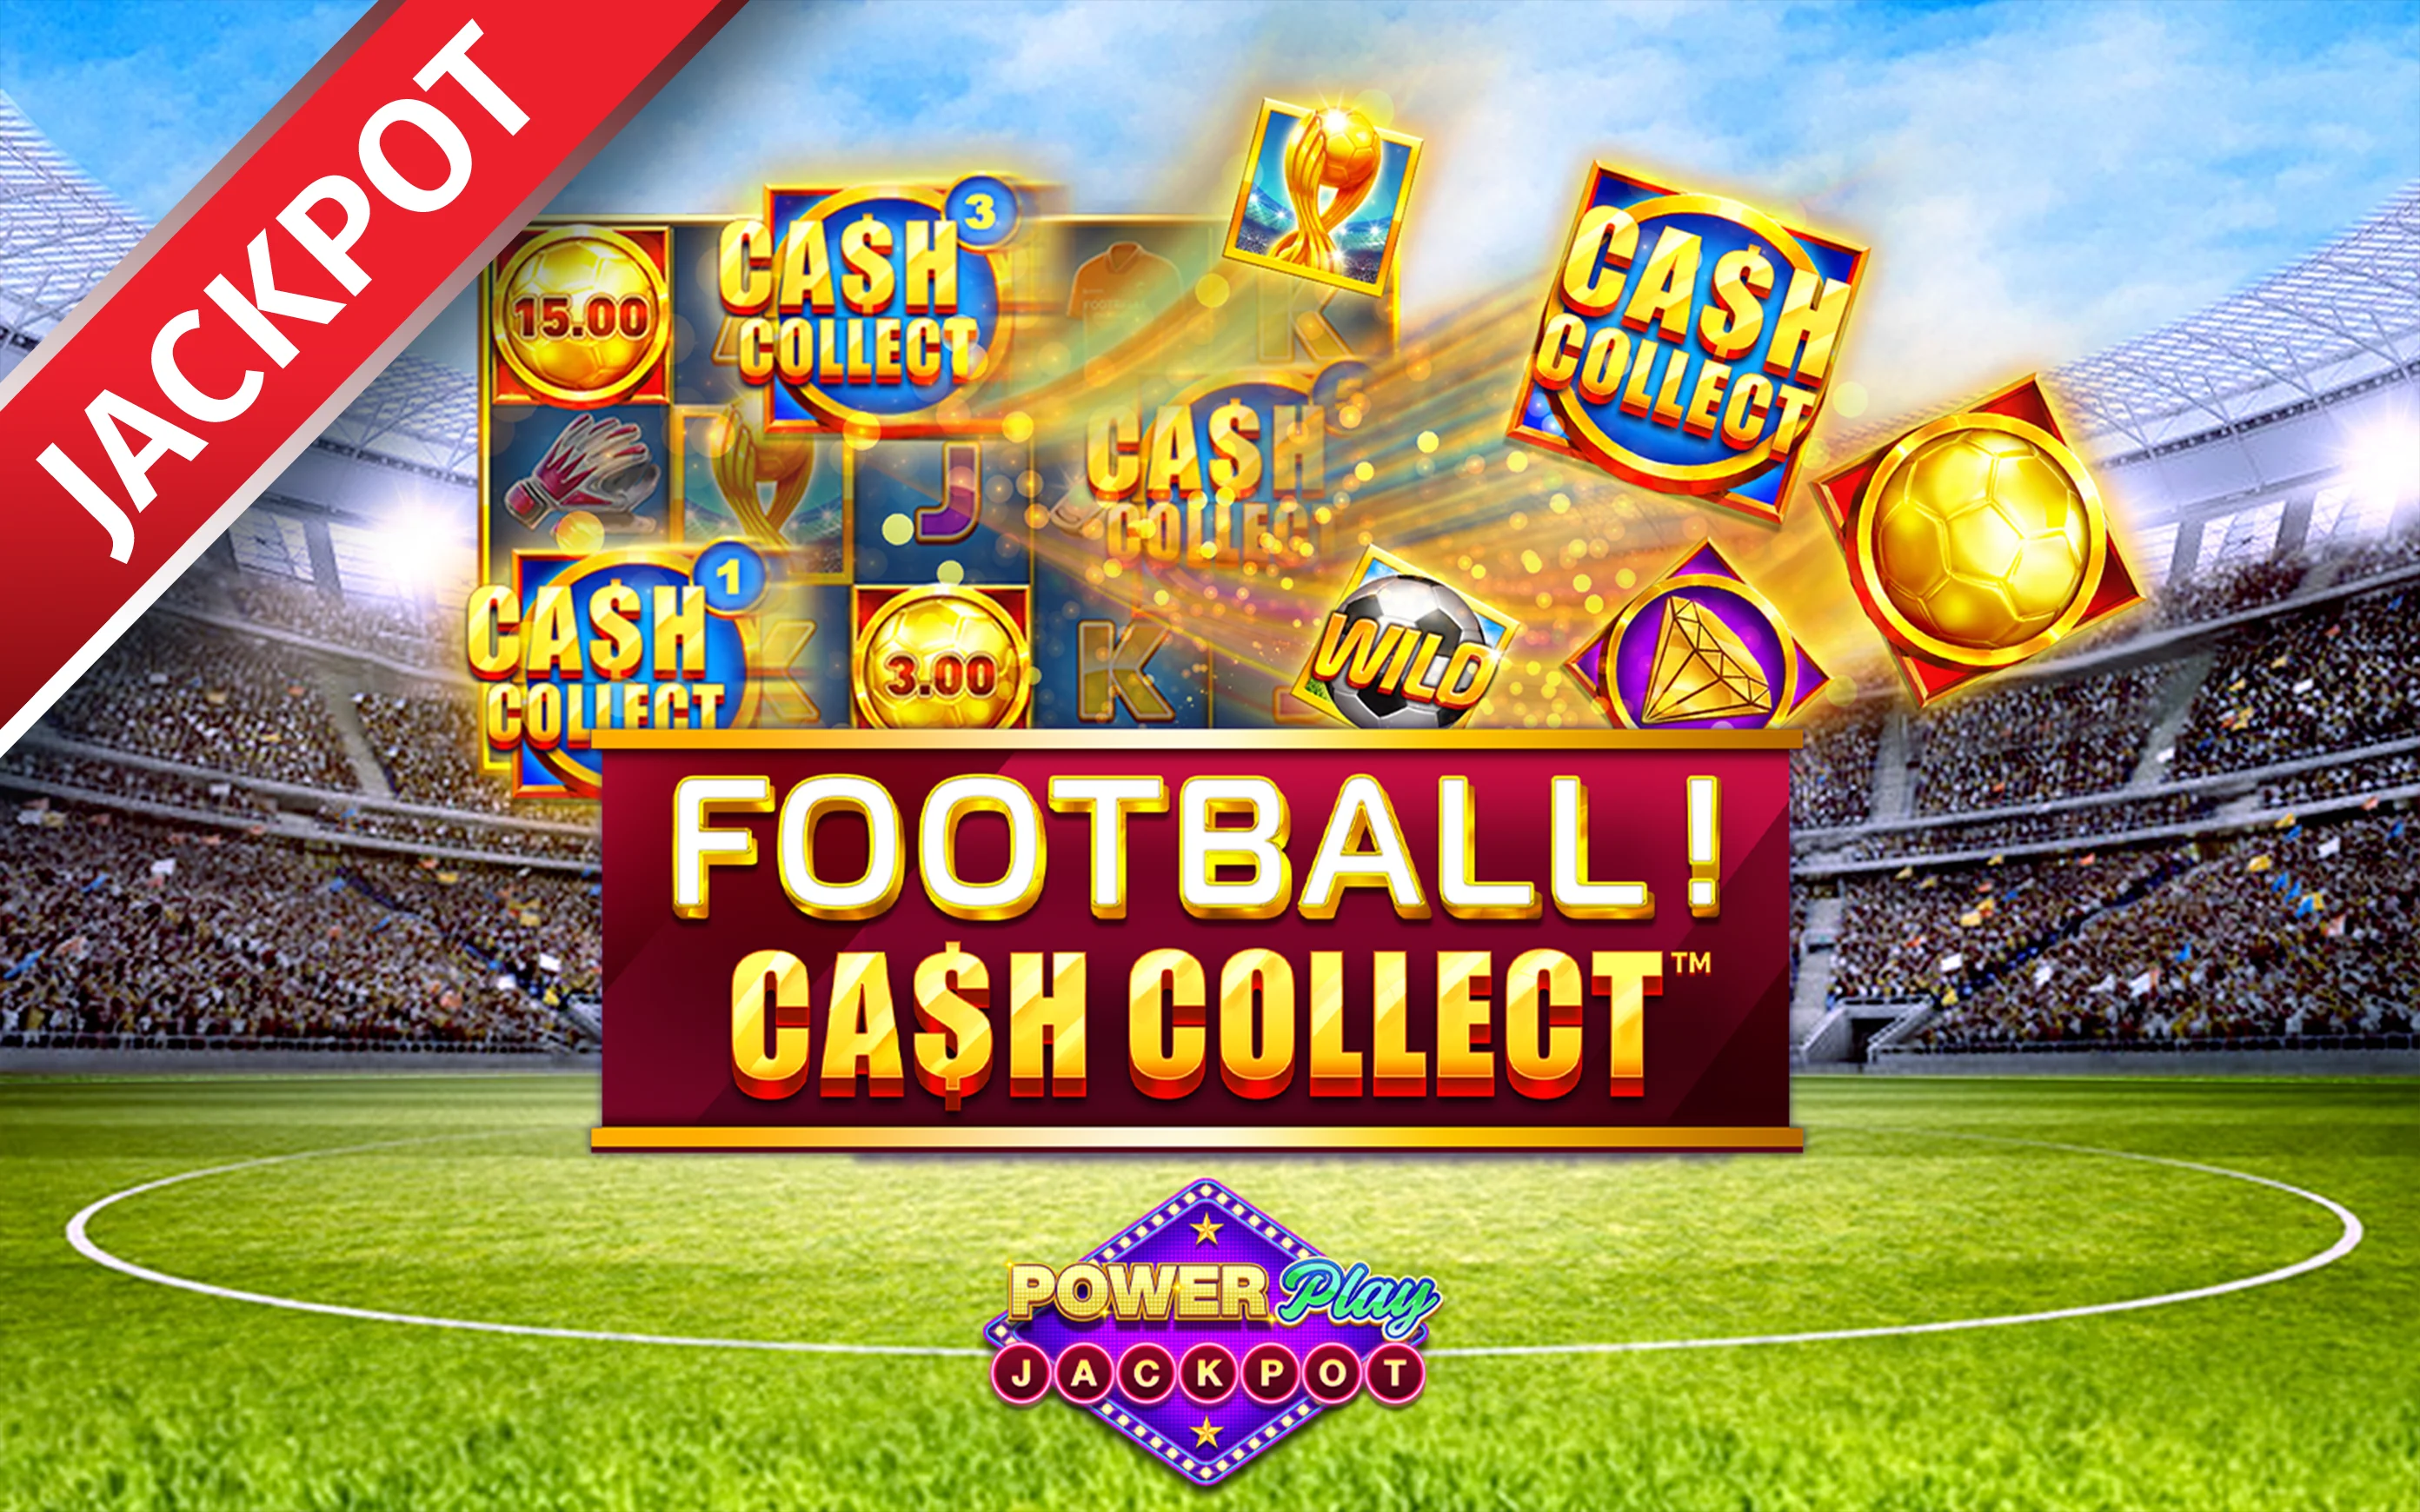 Juega a Football! Cash Collect™ PowerPlay Jackpot en el casino en línea de Starcasino.be